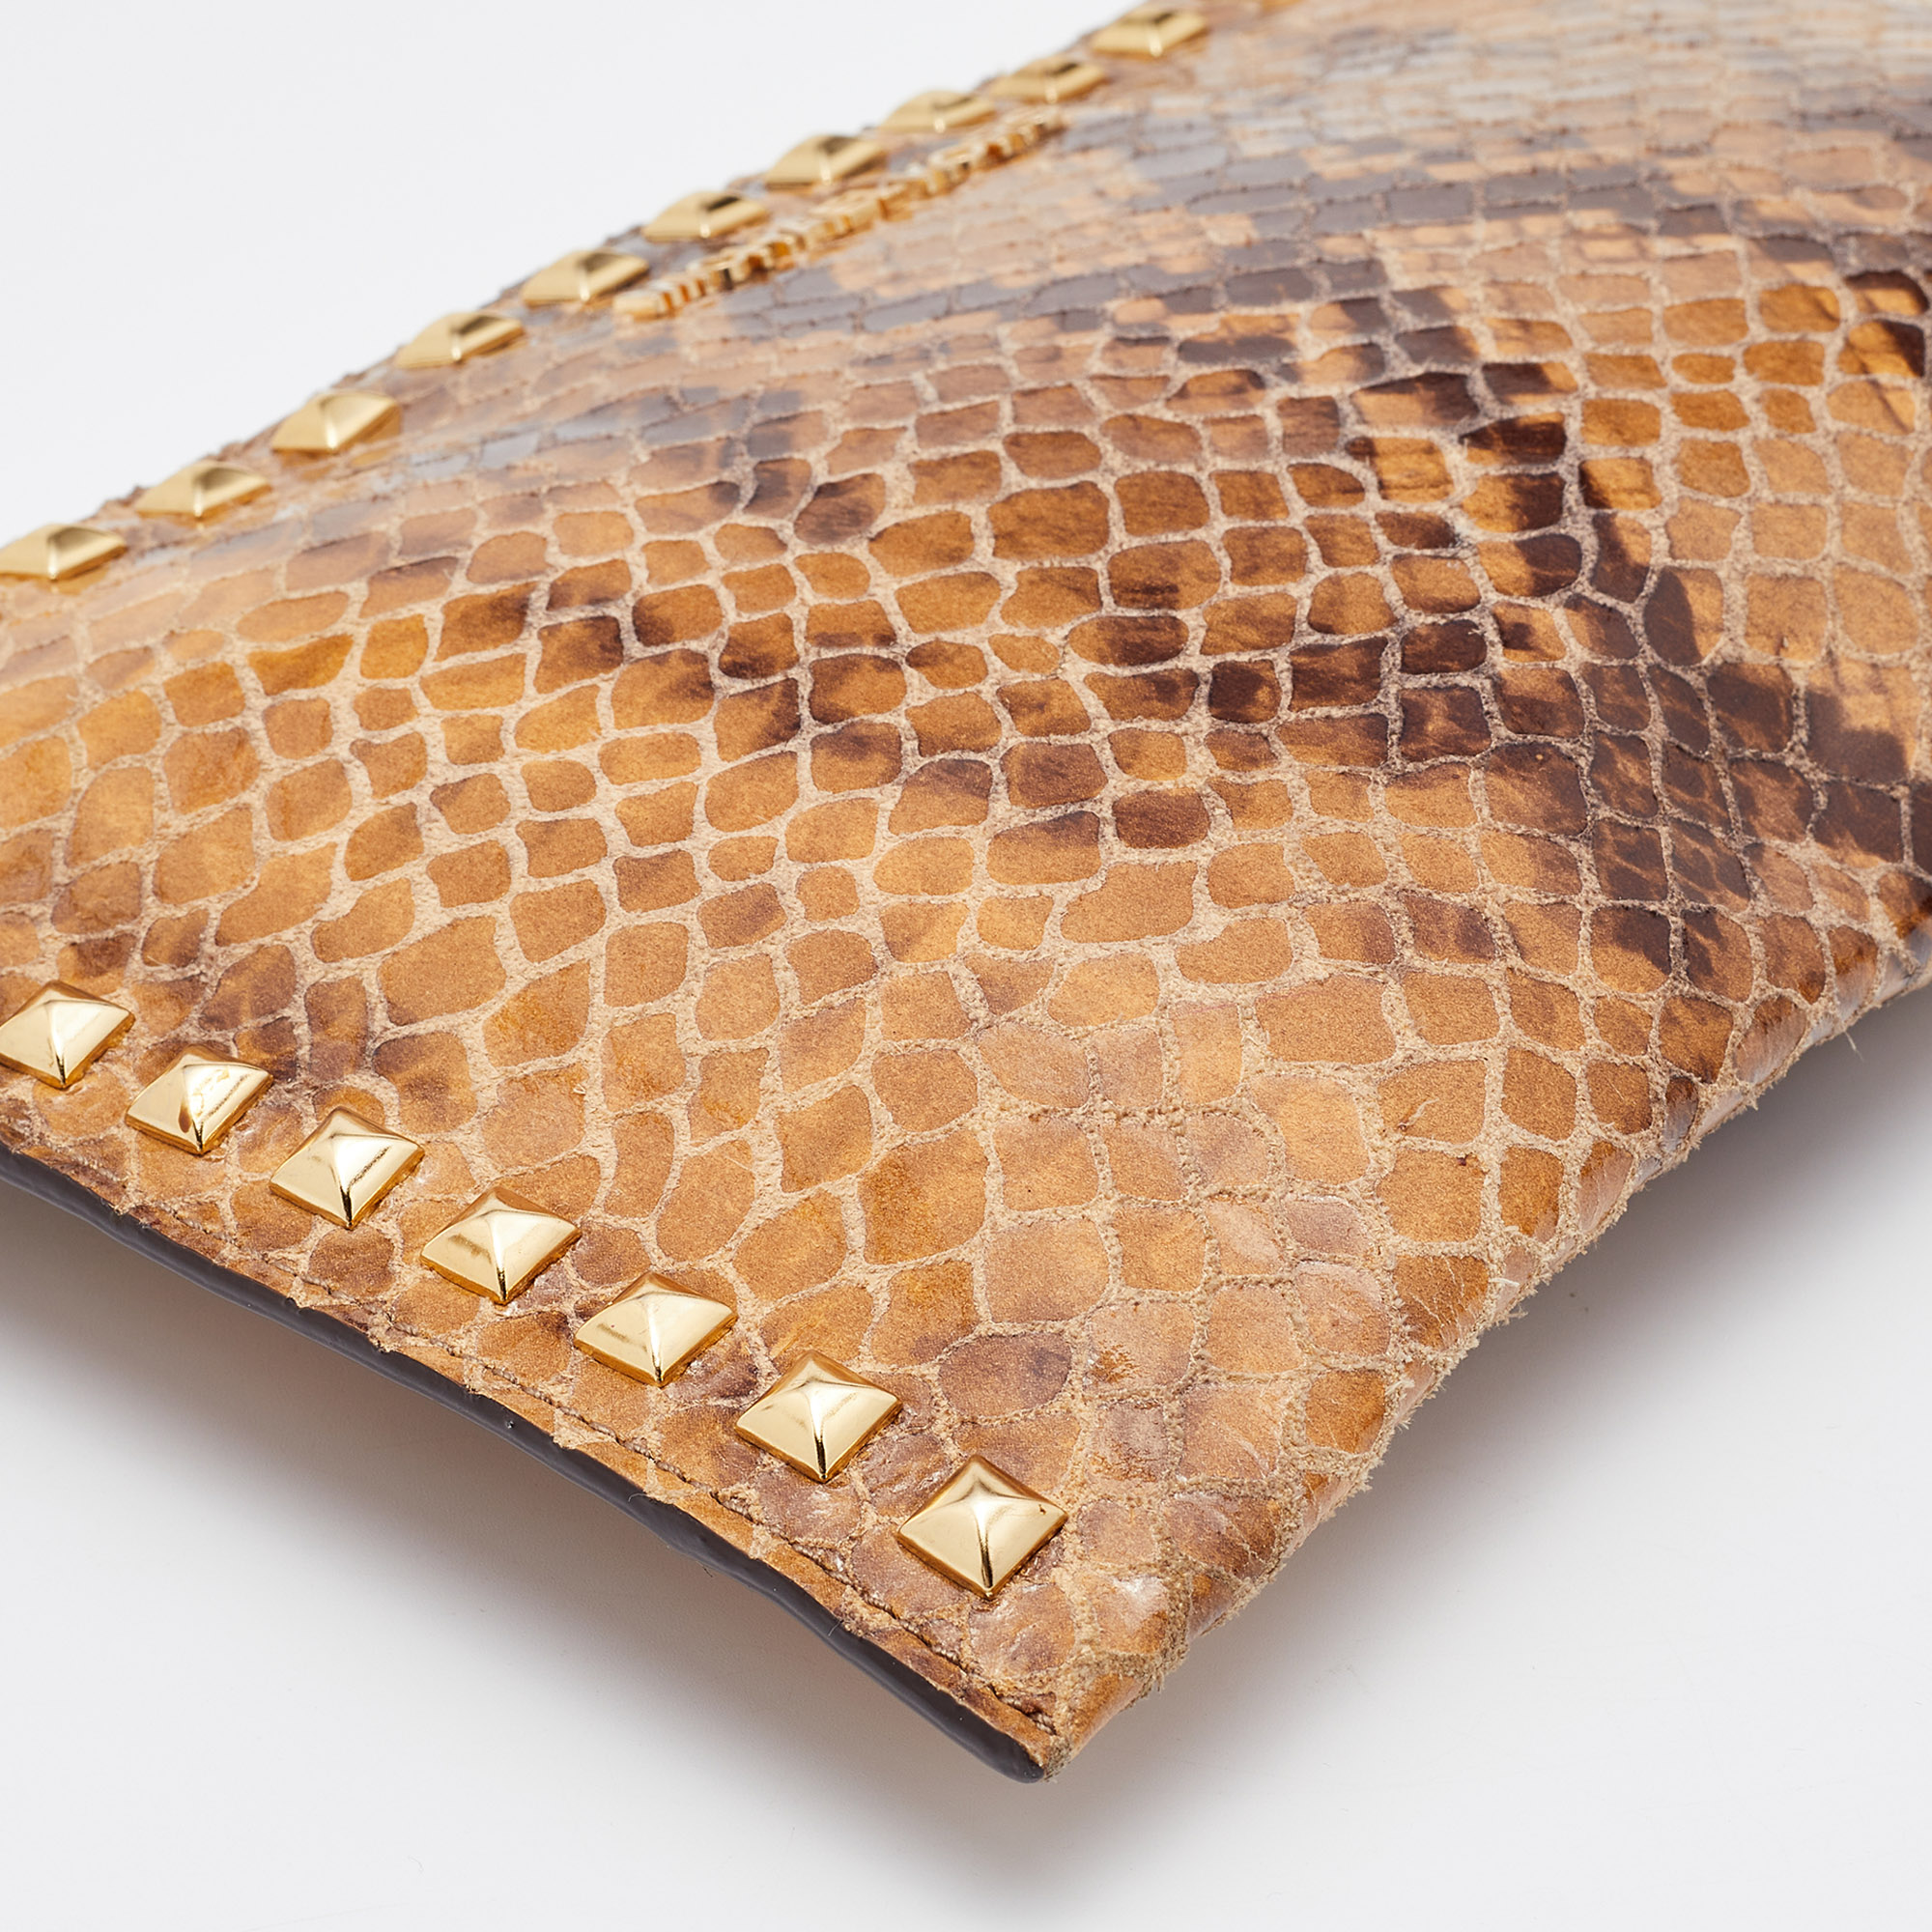 Michael Kors Brown Snakeskin Embossed Leather Studded Sandrine Clutch